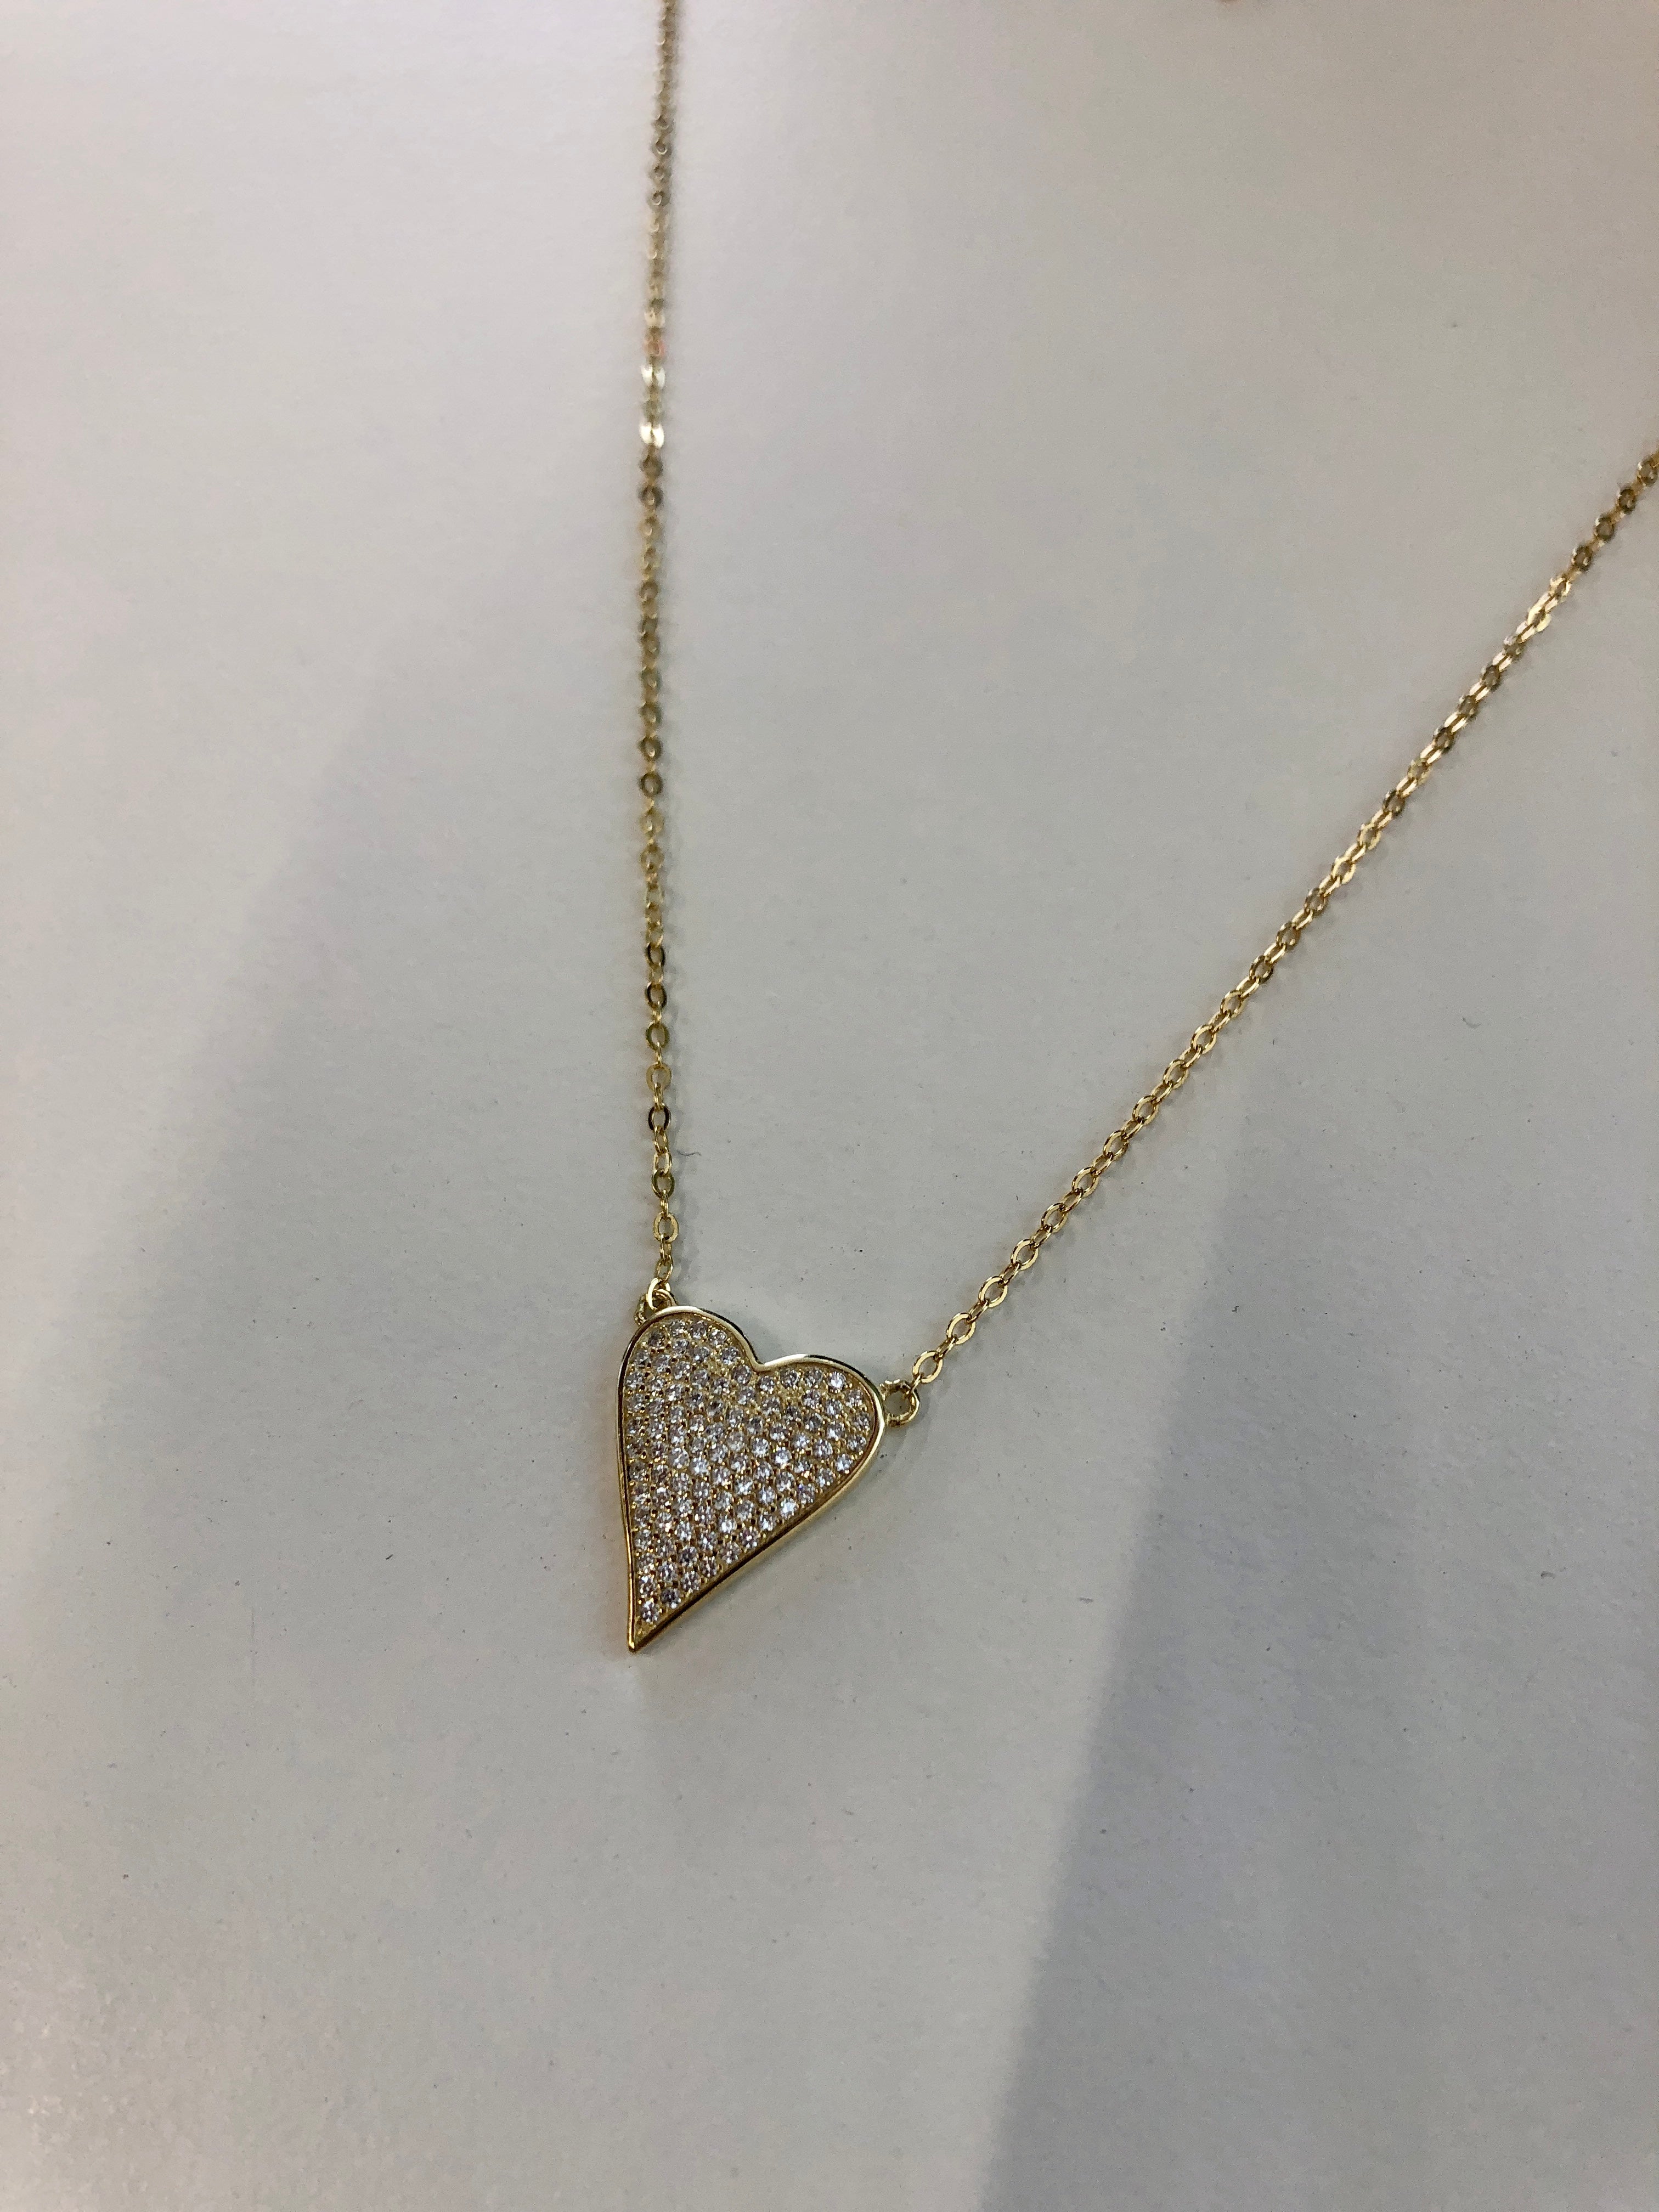 Audrey Heart Necklace